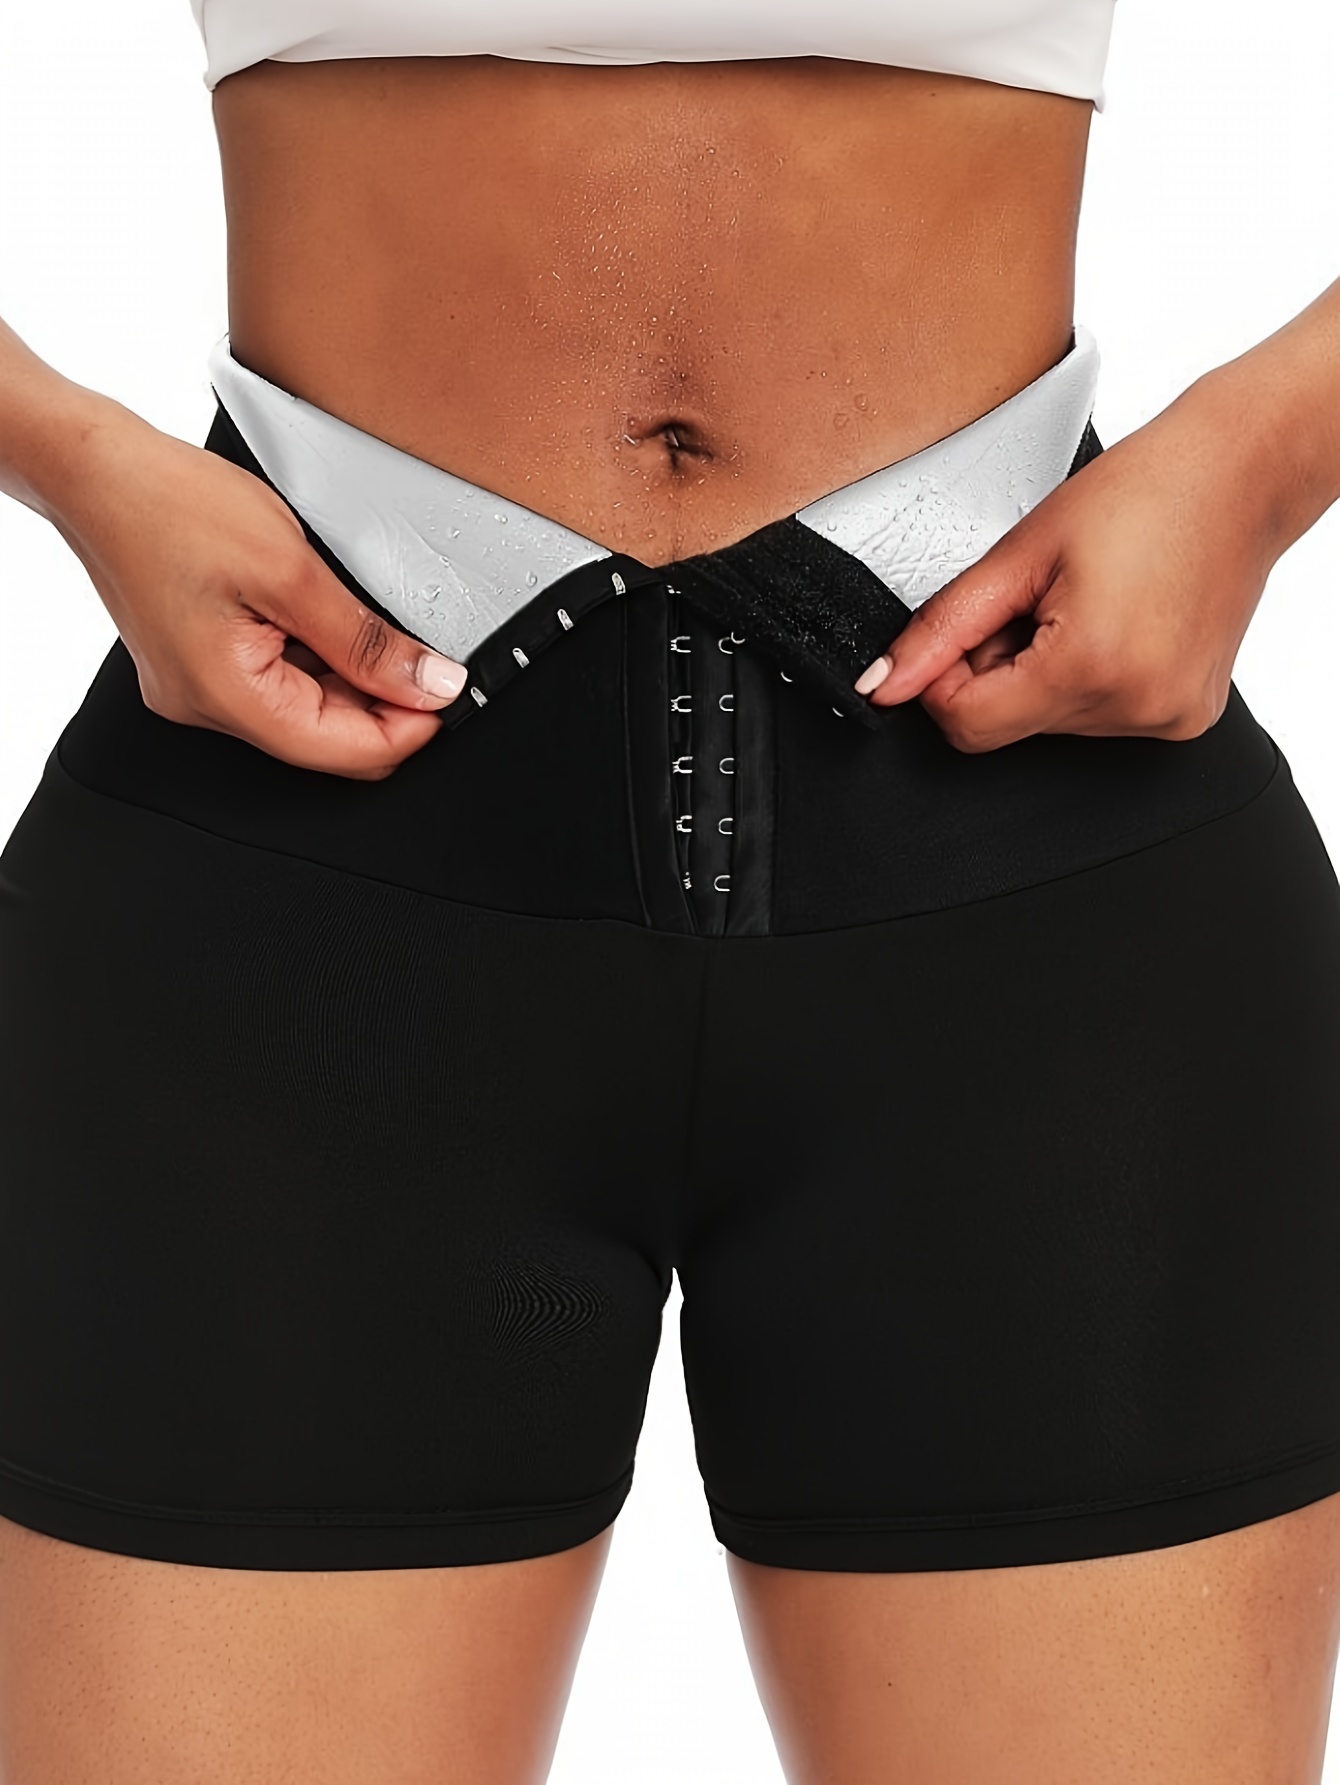 Sauna Sweat Pants For Women High Waist Slimming Waist Trainer